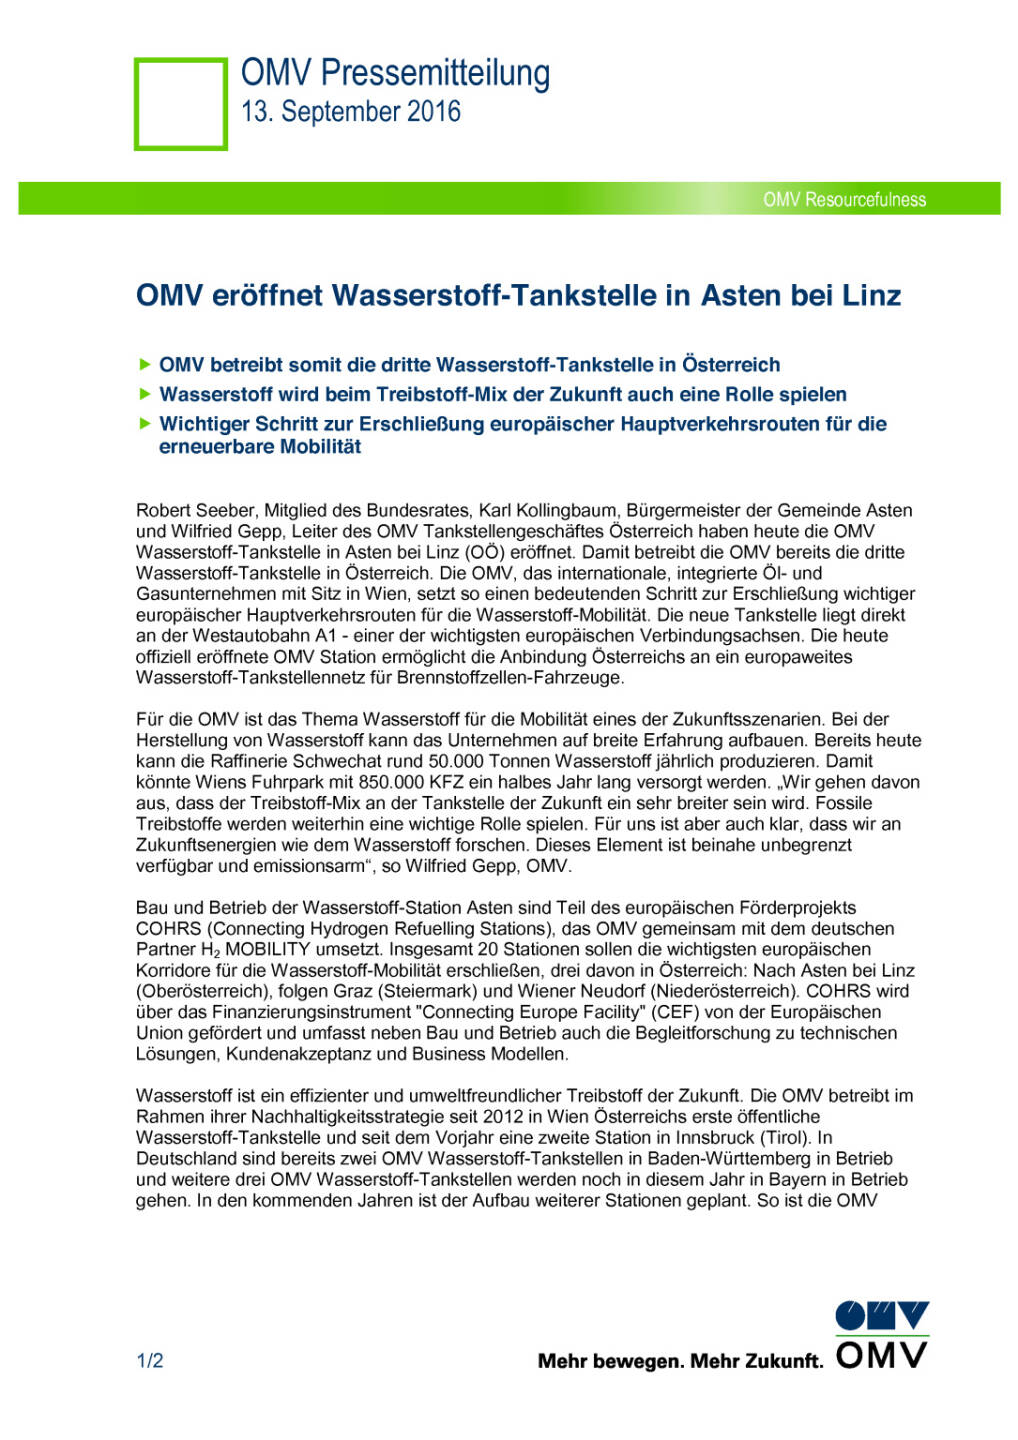 OMV eröffnet Wasserstoff-Tankstelle in Asten bei Linz, Seite 1/2, komplettes Dokument unter http://boerse-social.com/static/uploads/file_1771_omv_eröffnet_wasserstoff-tankstelle_in_asten_bei_linz.pdf